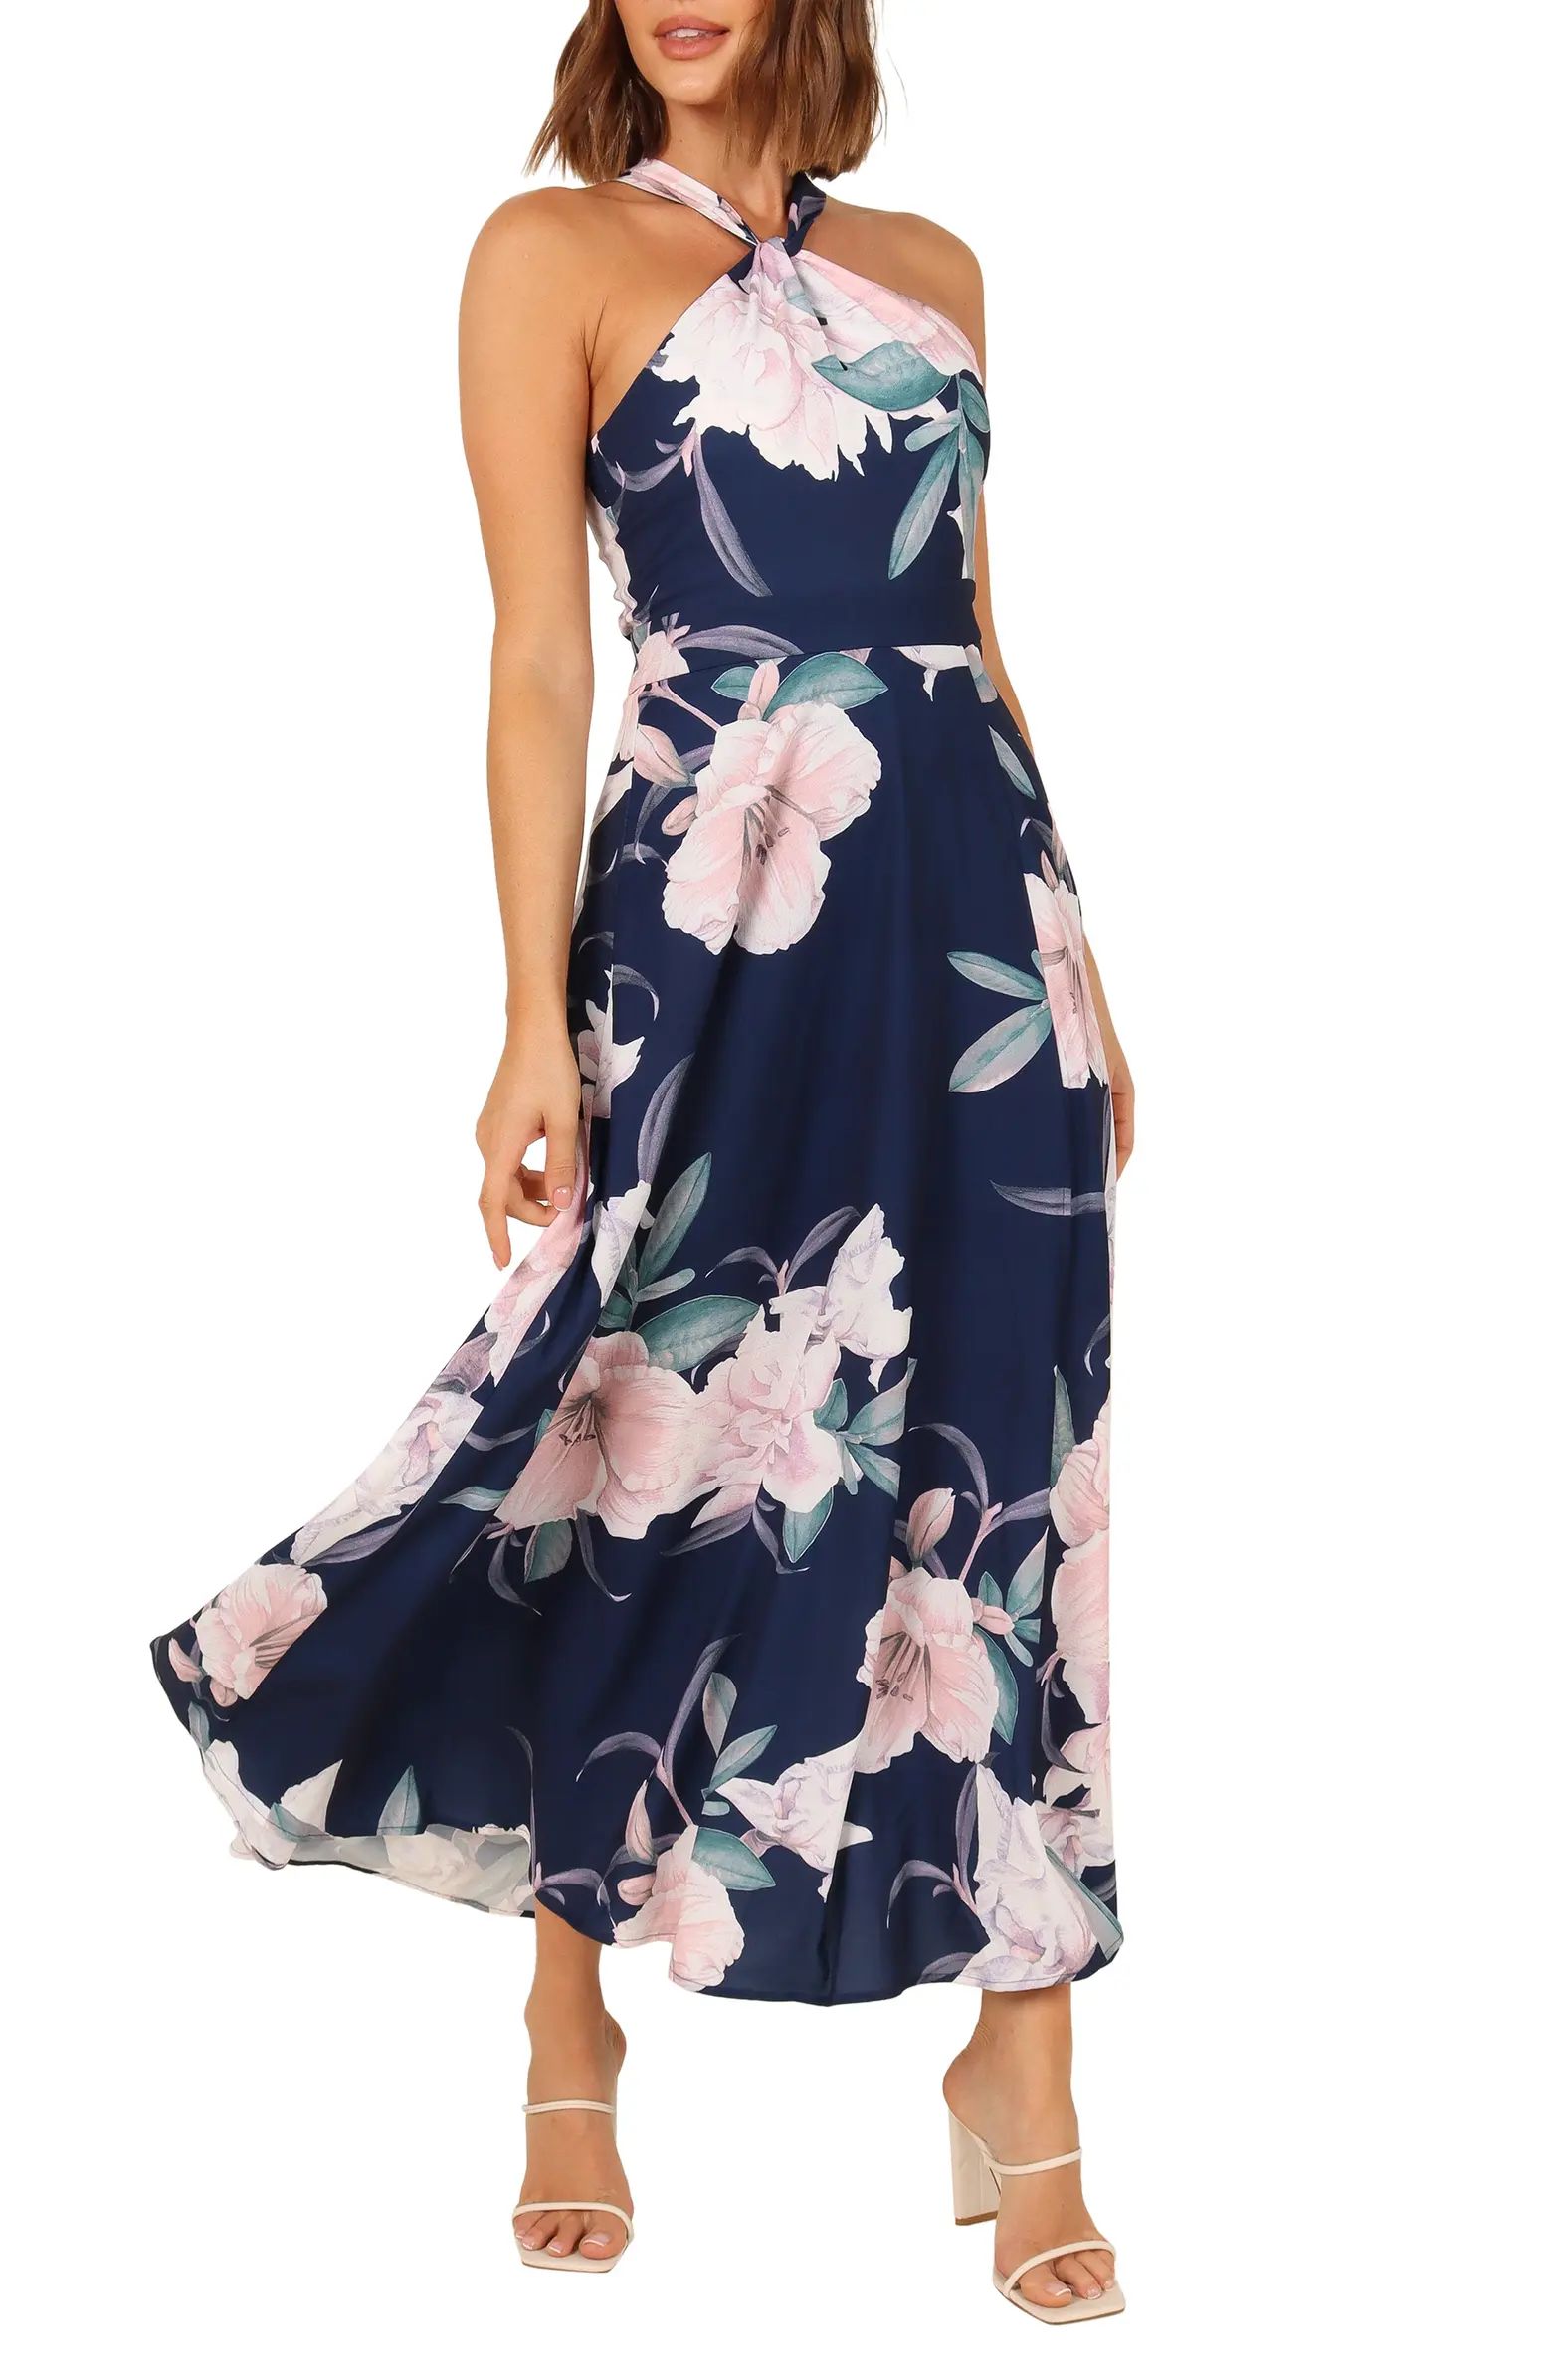 Miara Floral Print Halter Dress | Nordstrom